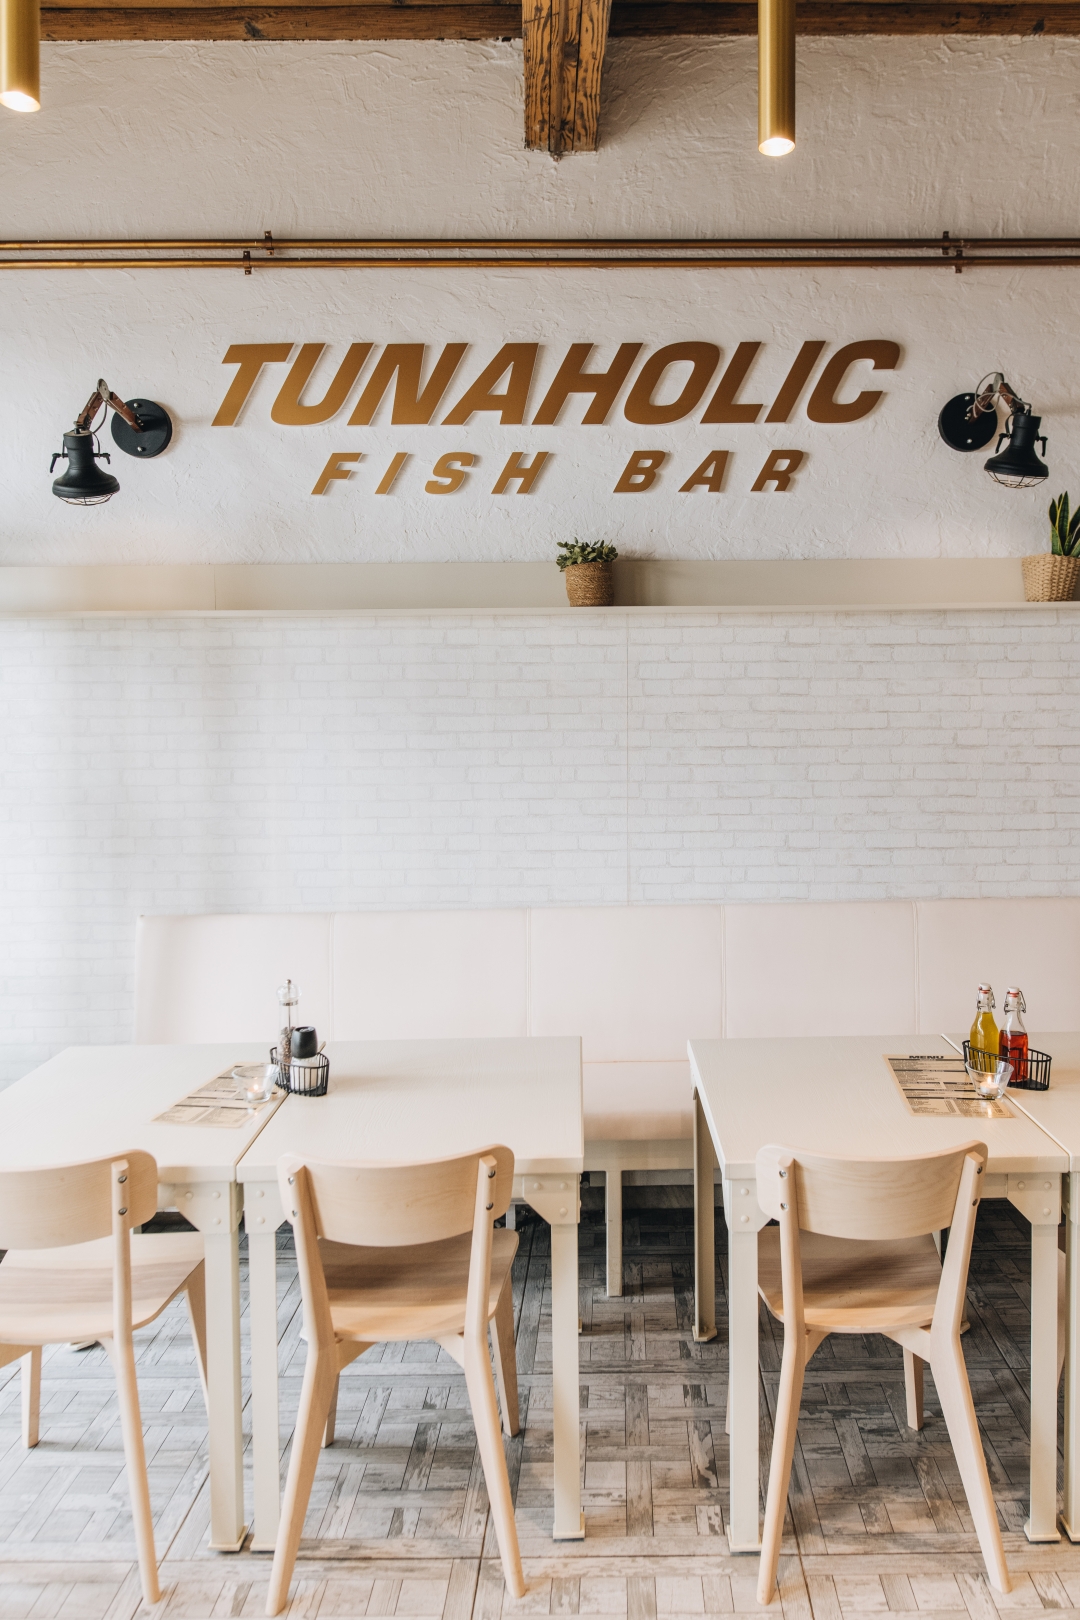 Tunaholic fish bar